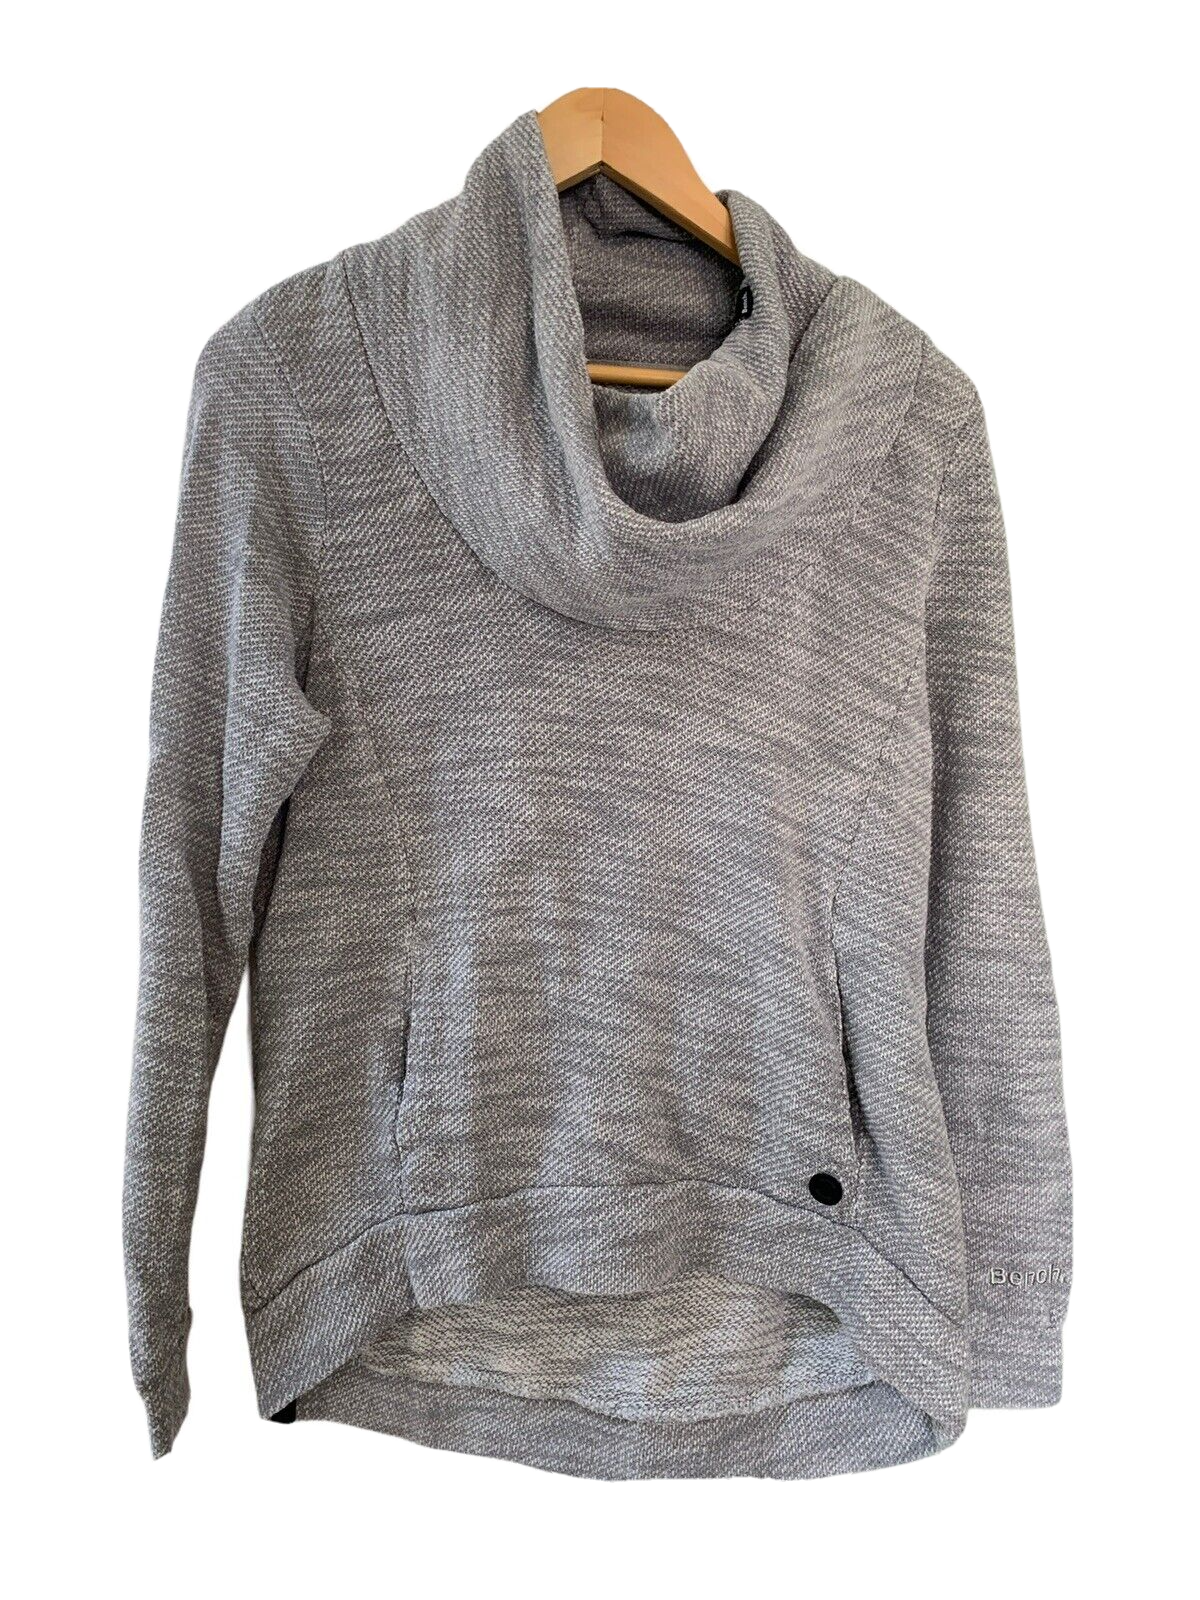 Bench Urban Apparel Long Sleeve Funnel Neck Sweatshirt Marled Gray M Medium